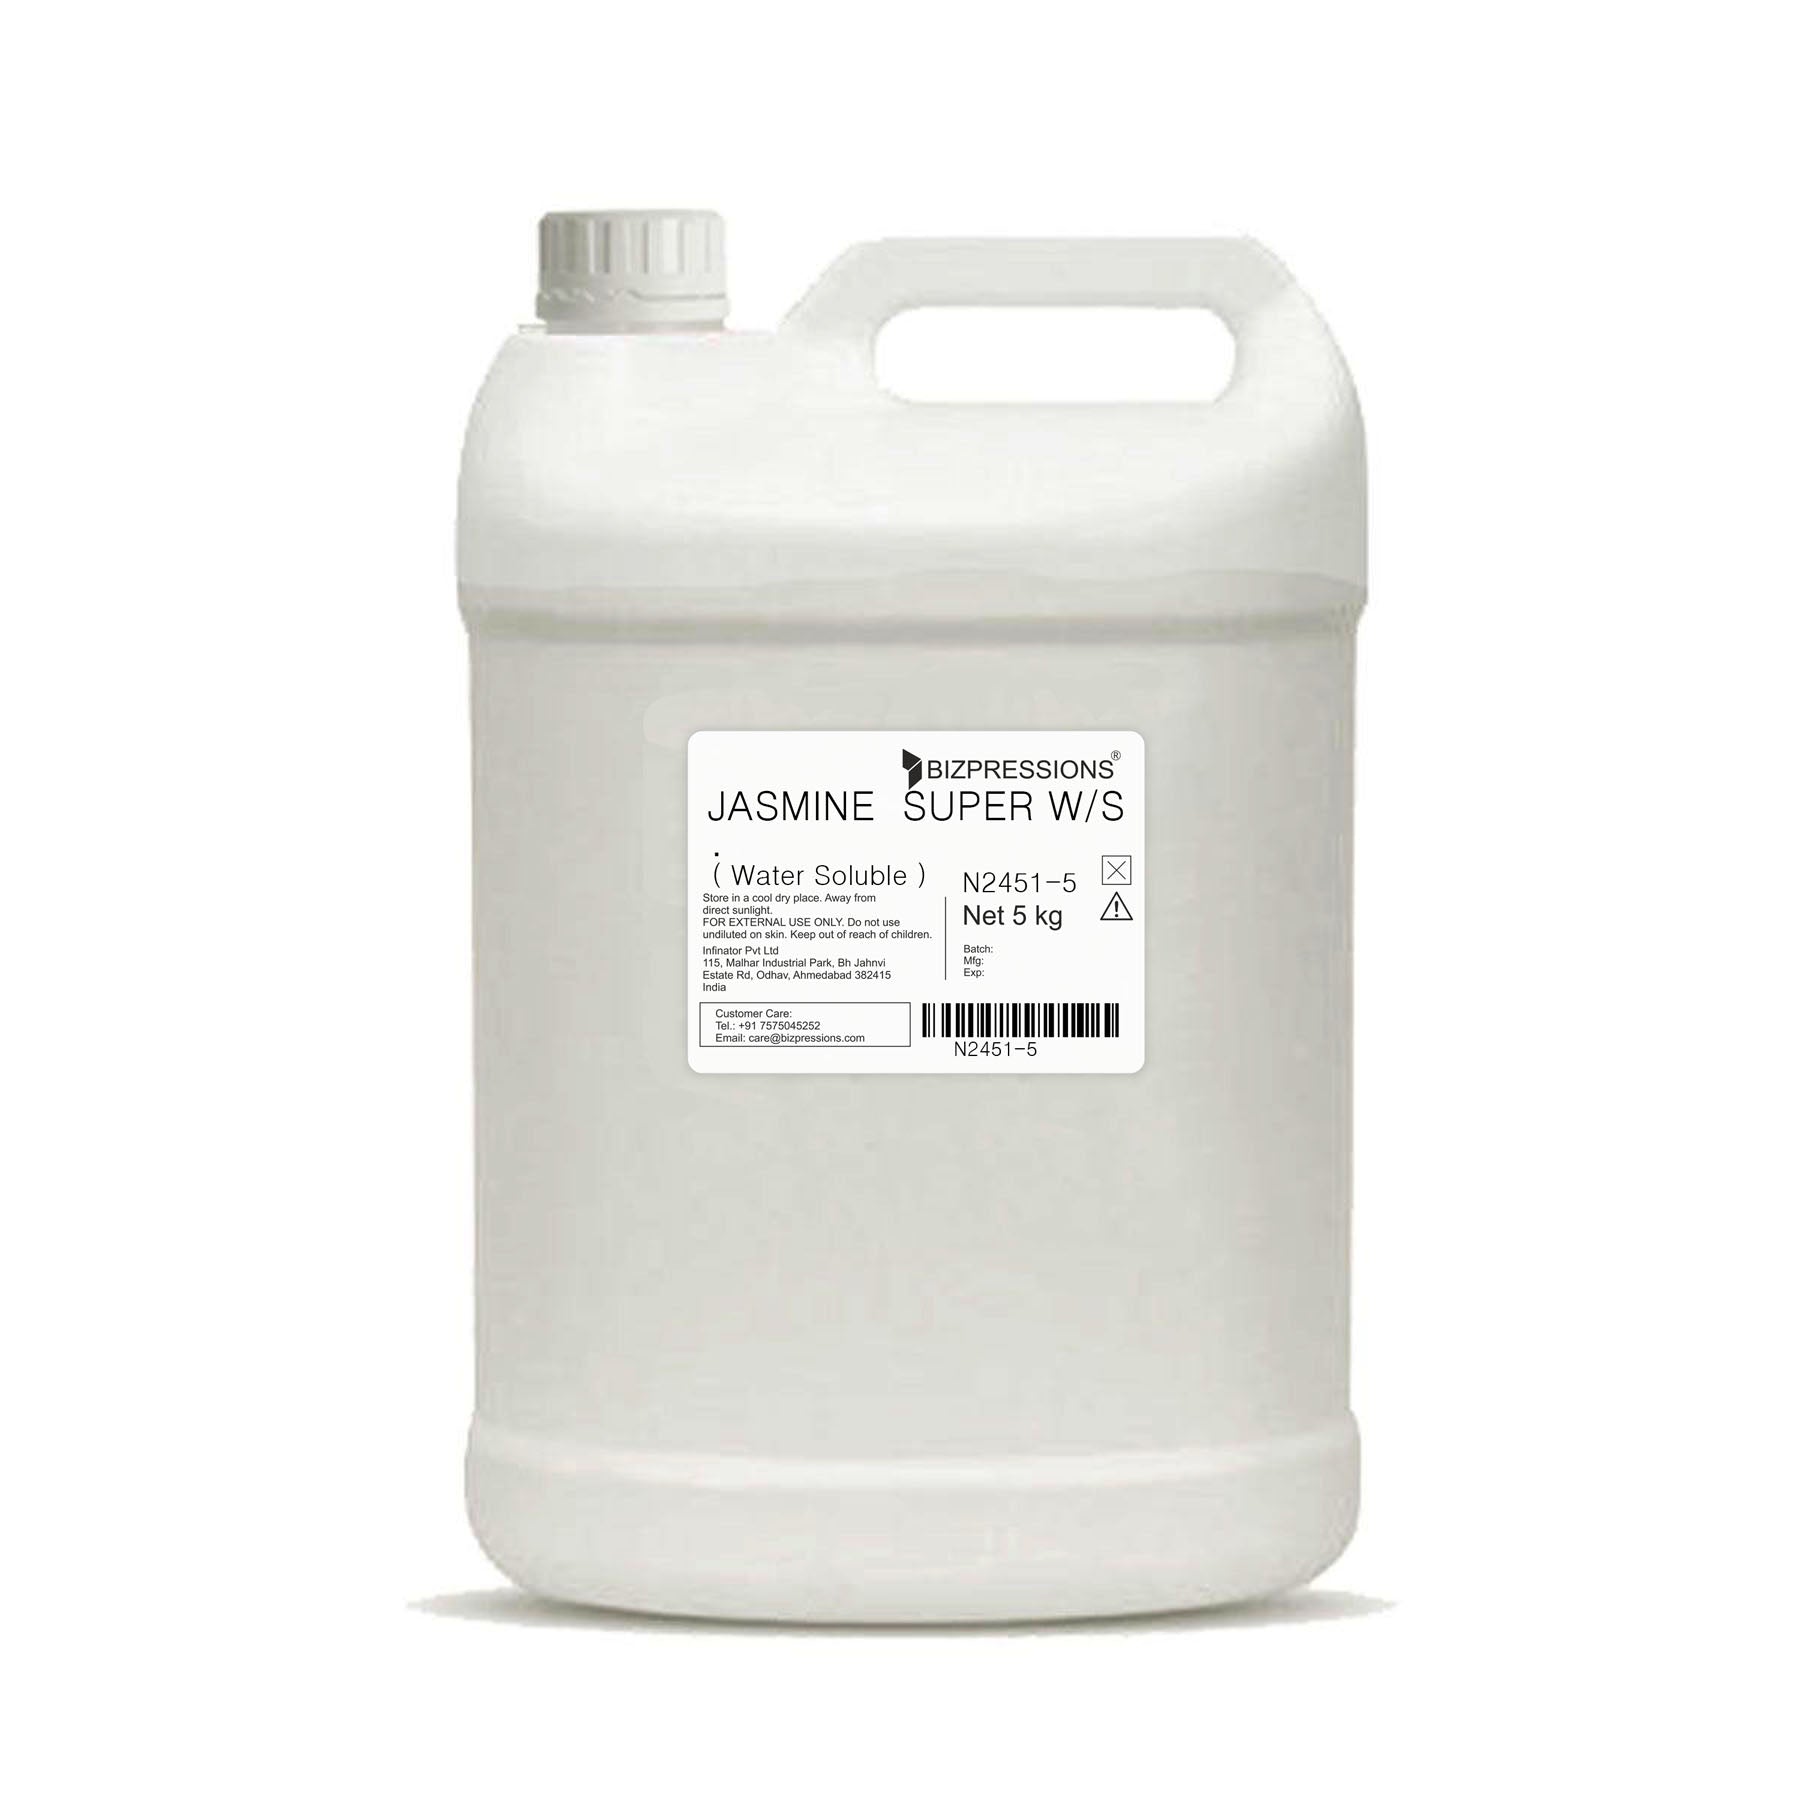 JASMINE SUPER W/S - Fragrance ( Water Soluble ) - 5 kg